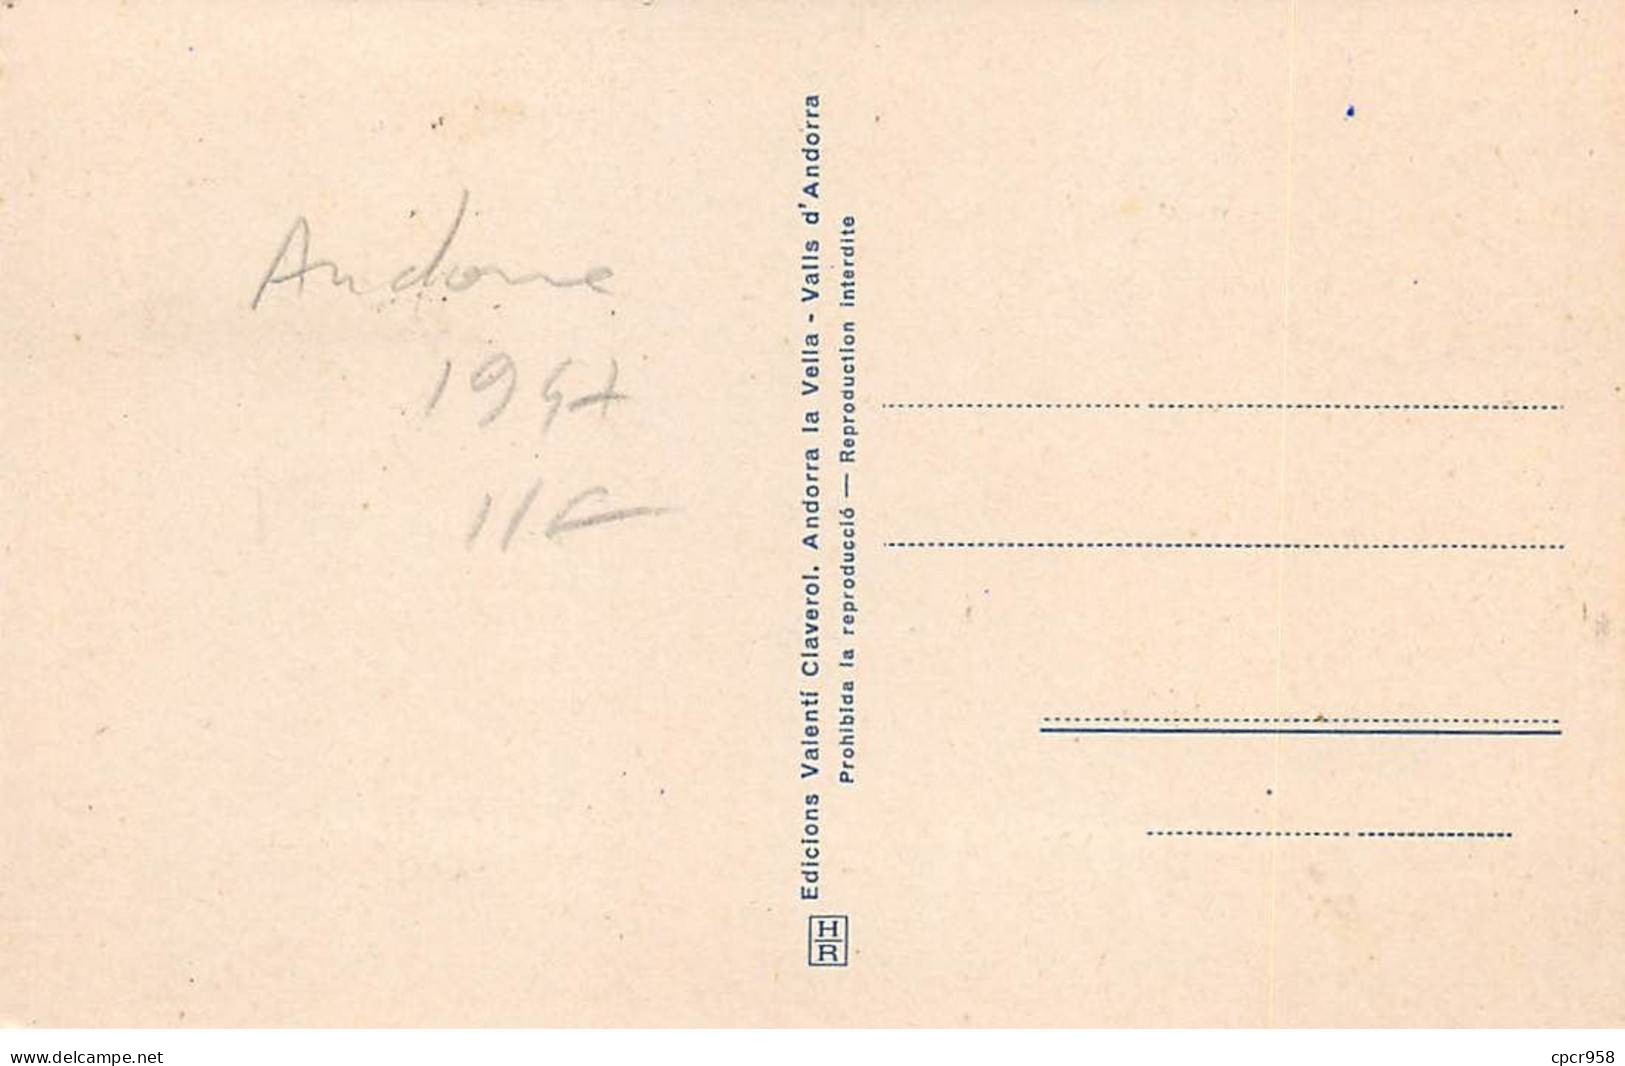 ANDORRE.Carte Maximum.AM14024.1947.Cachet Andorre.Vallée D'Andorre.Gorges De St.Julia - Gebruikt